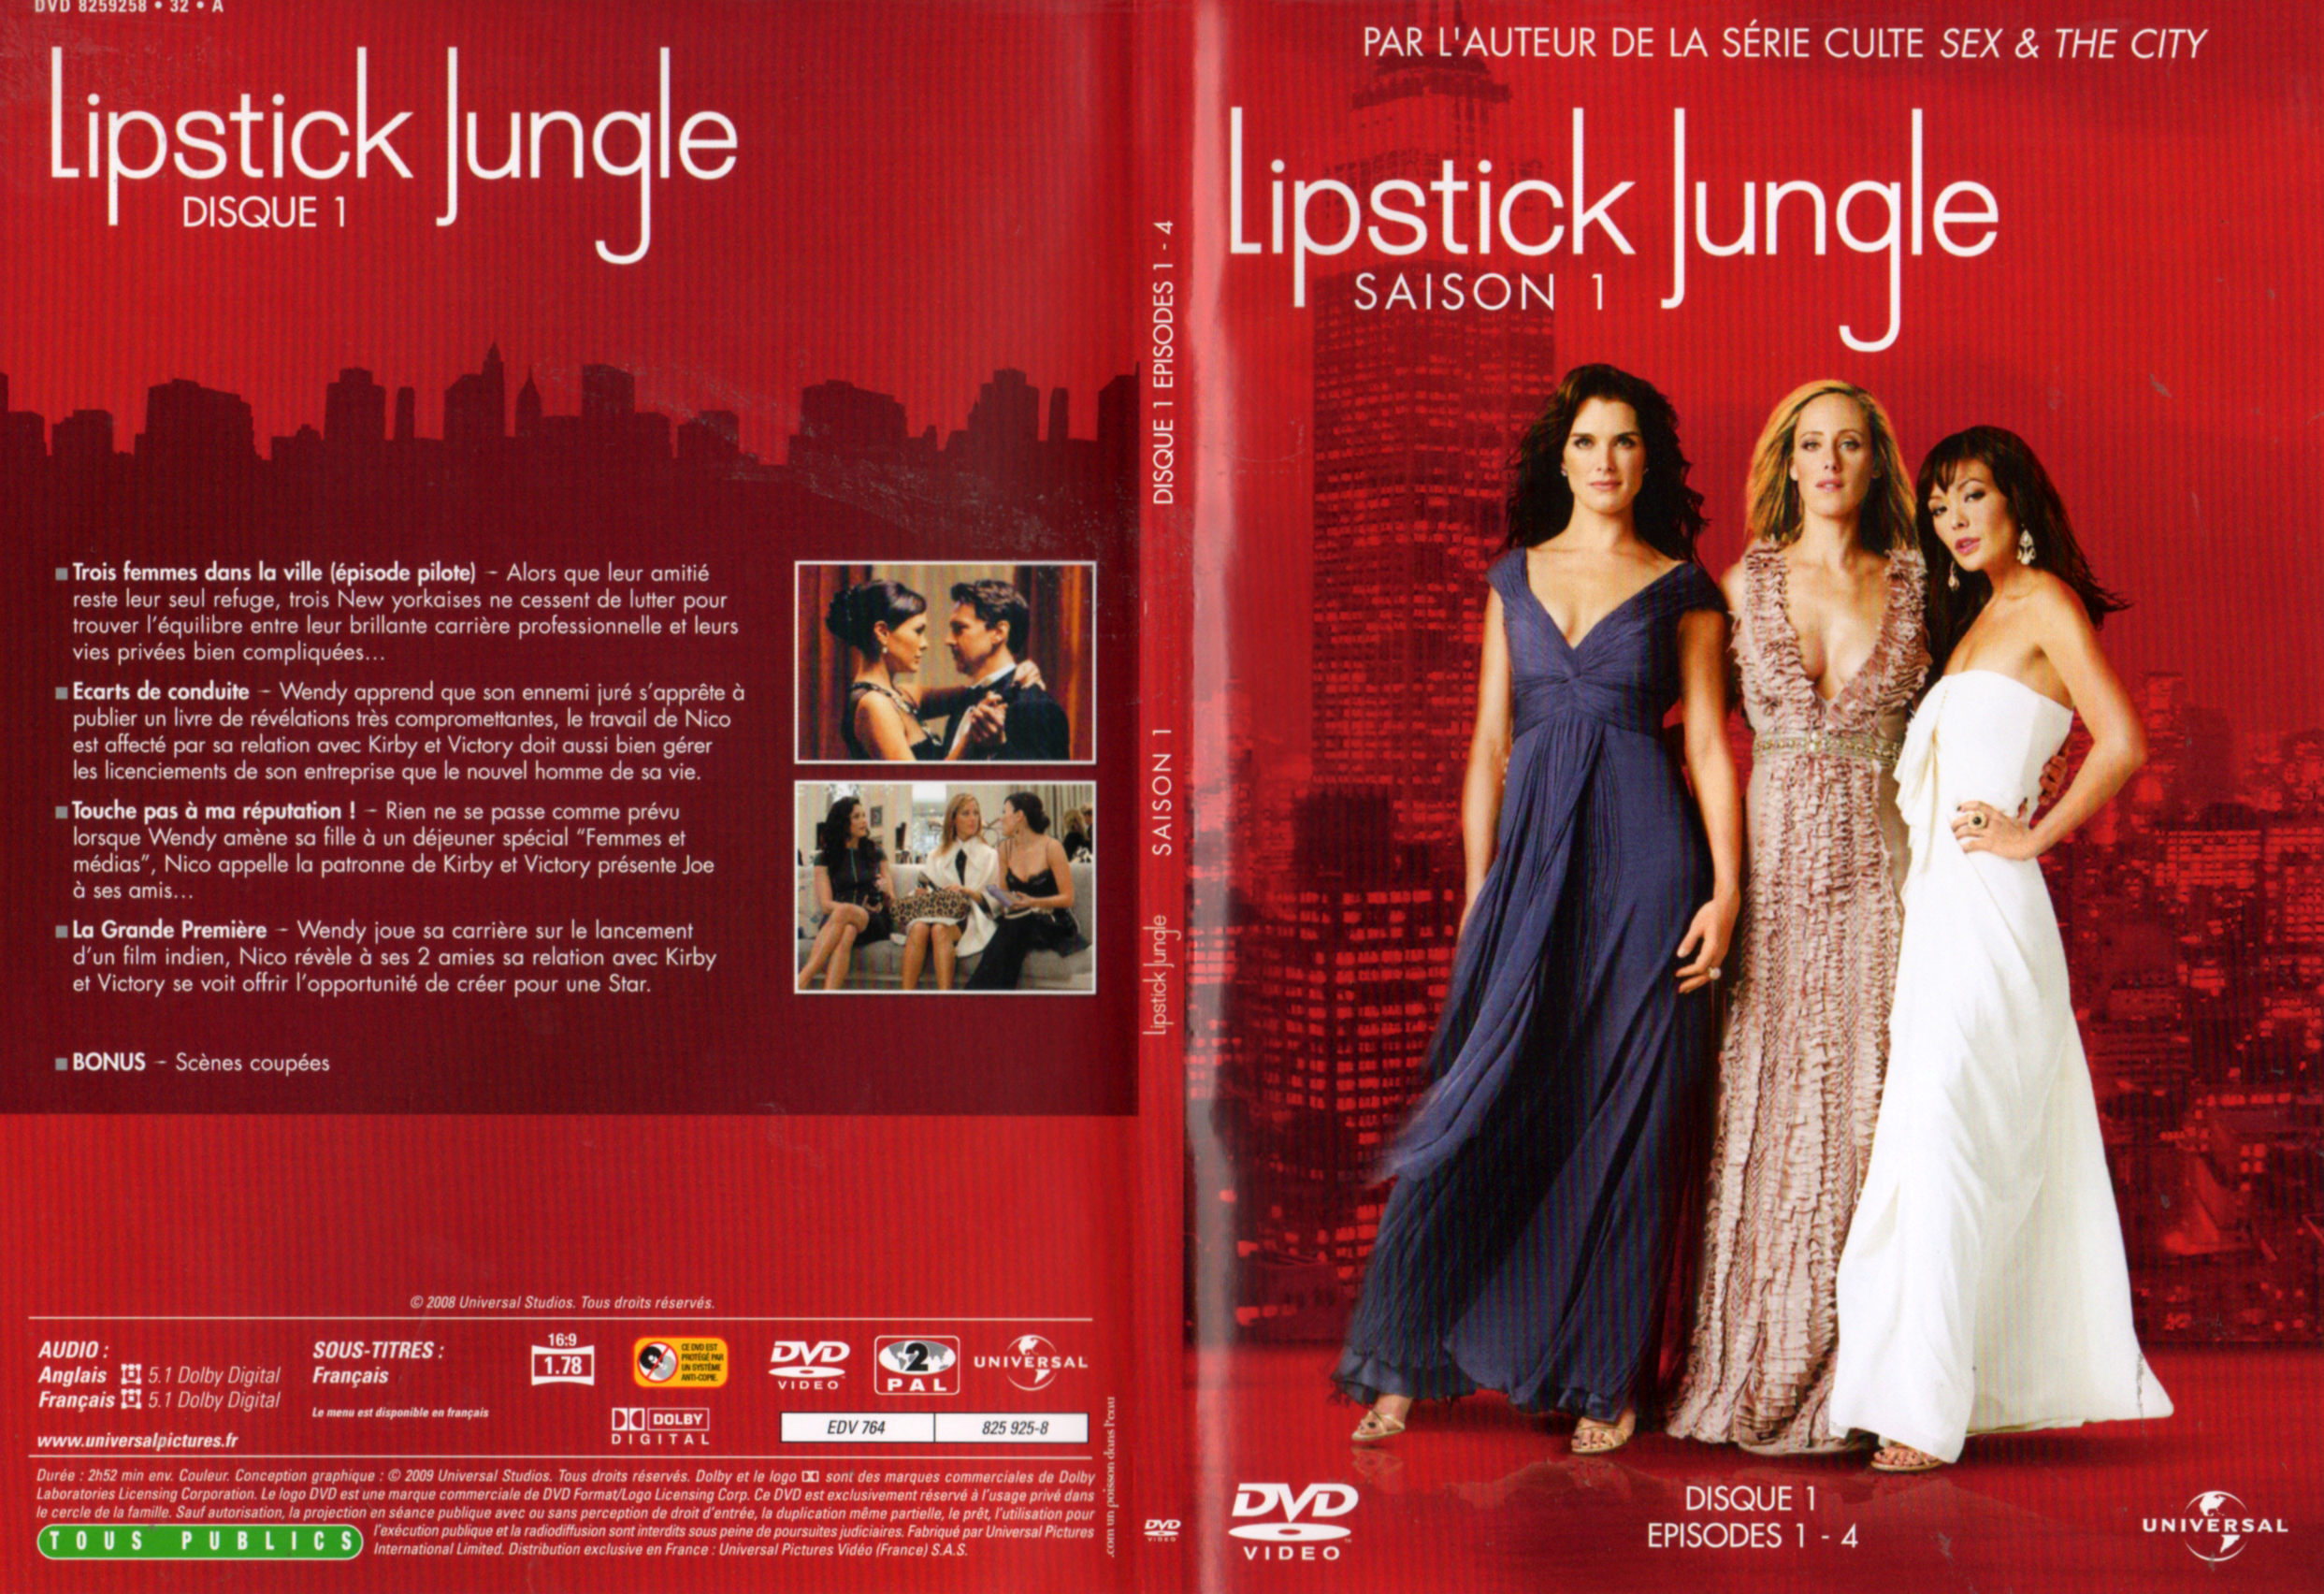 Jaquette DVD Lipstick jungle Saison 1 DVD 1